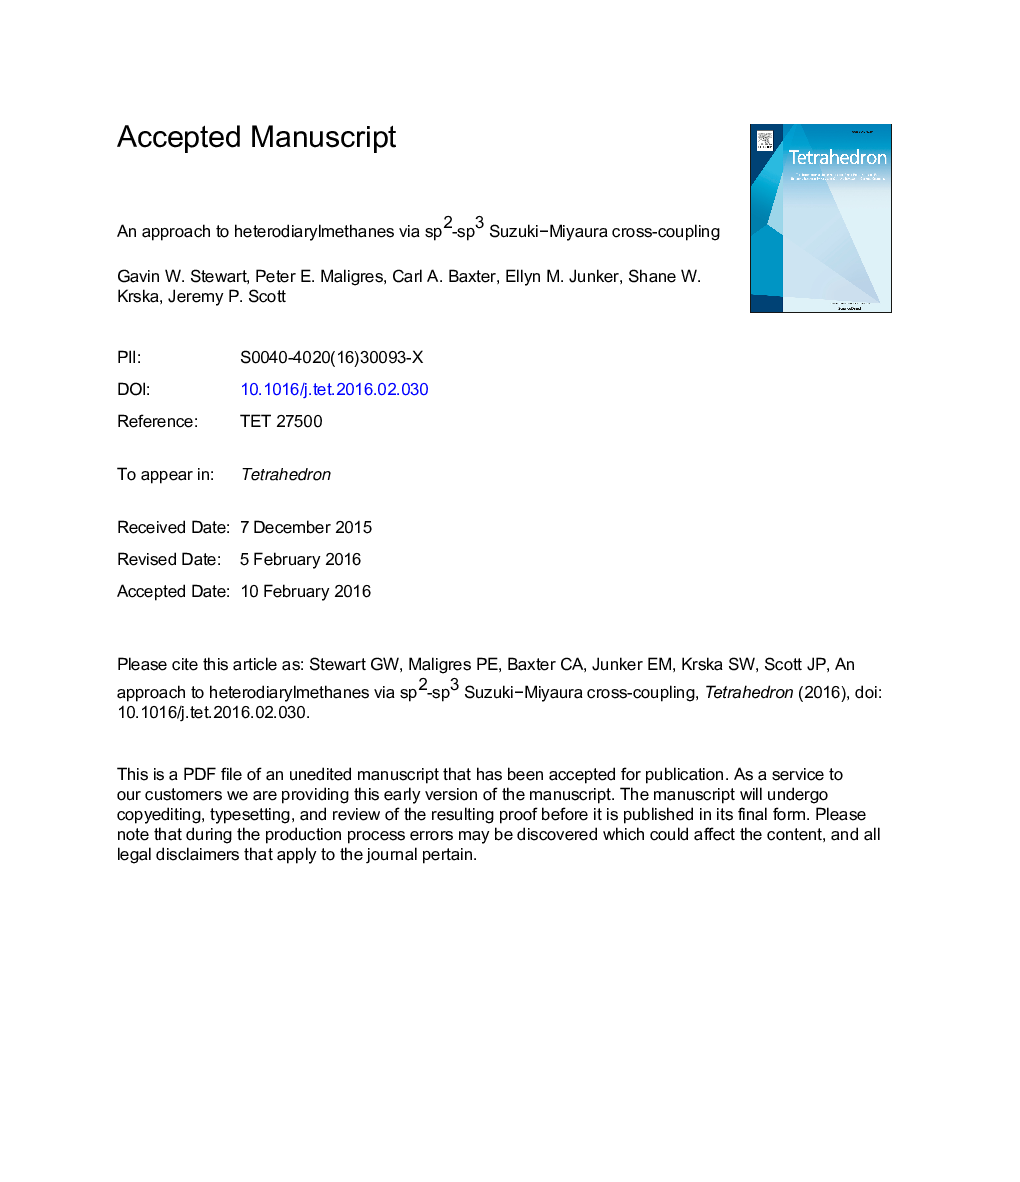 An approach to heterodiarylmethanes via sp2-sp3 SuzukiâMiyaura cross-coupling